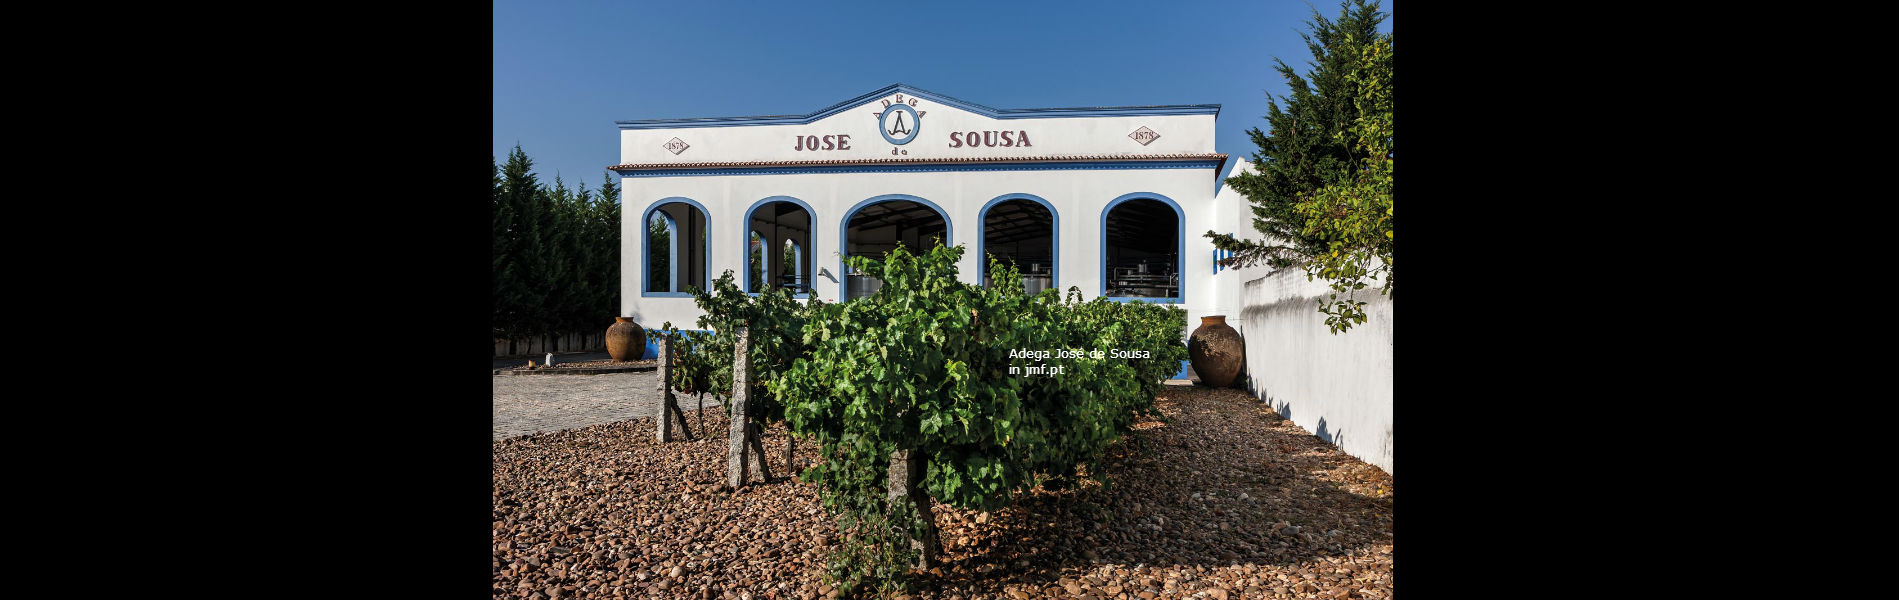 Blend-All-About-Wine-José de Sousa-history and prestige